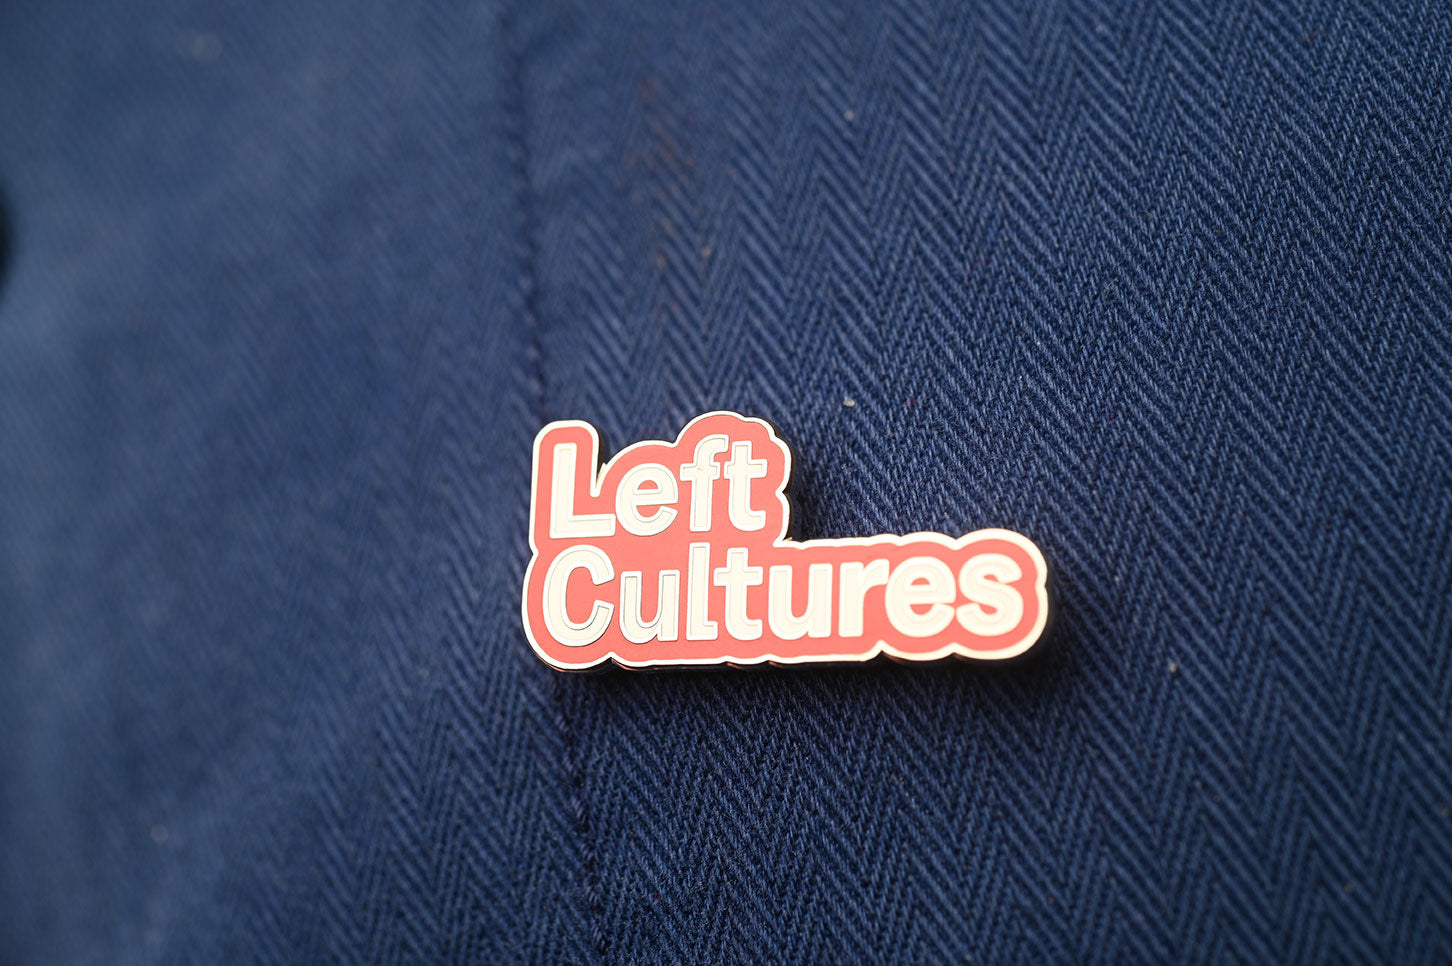 Left Cultures Enamel Pin Badge